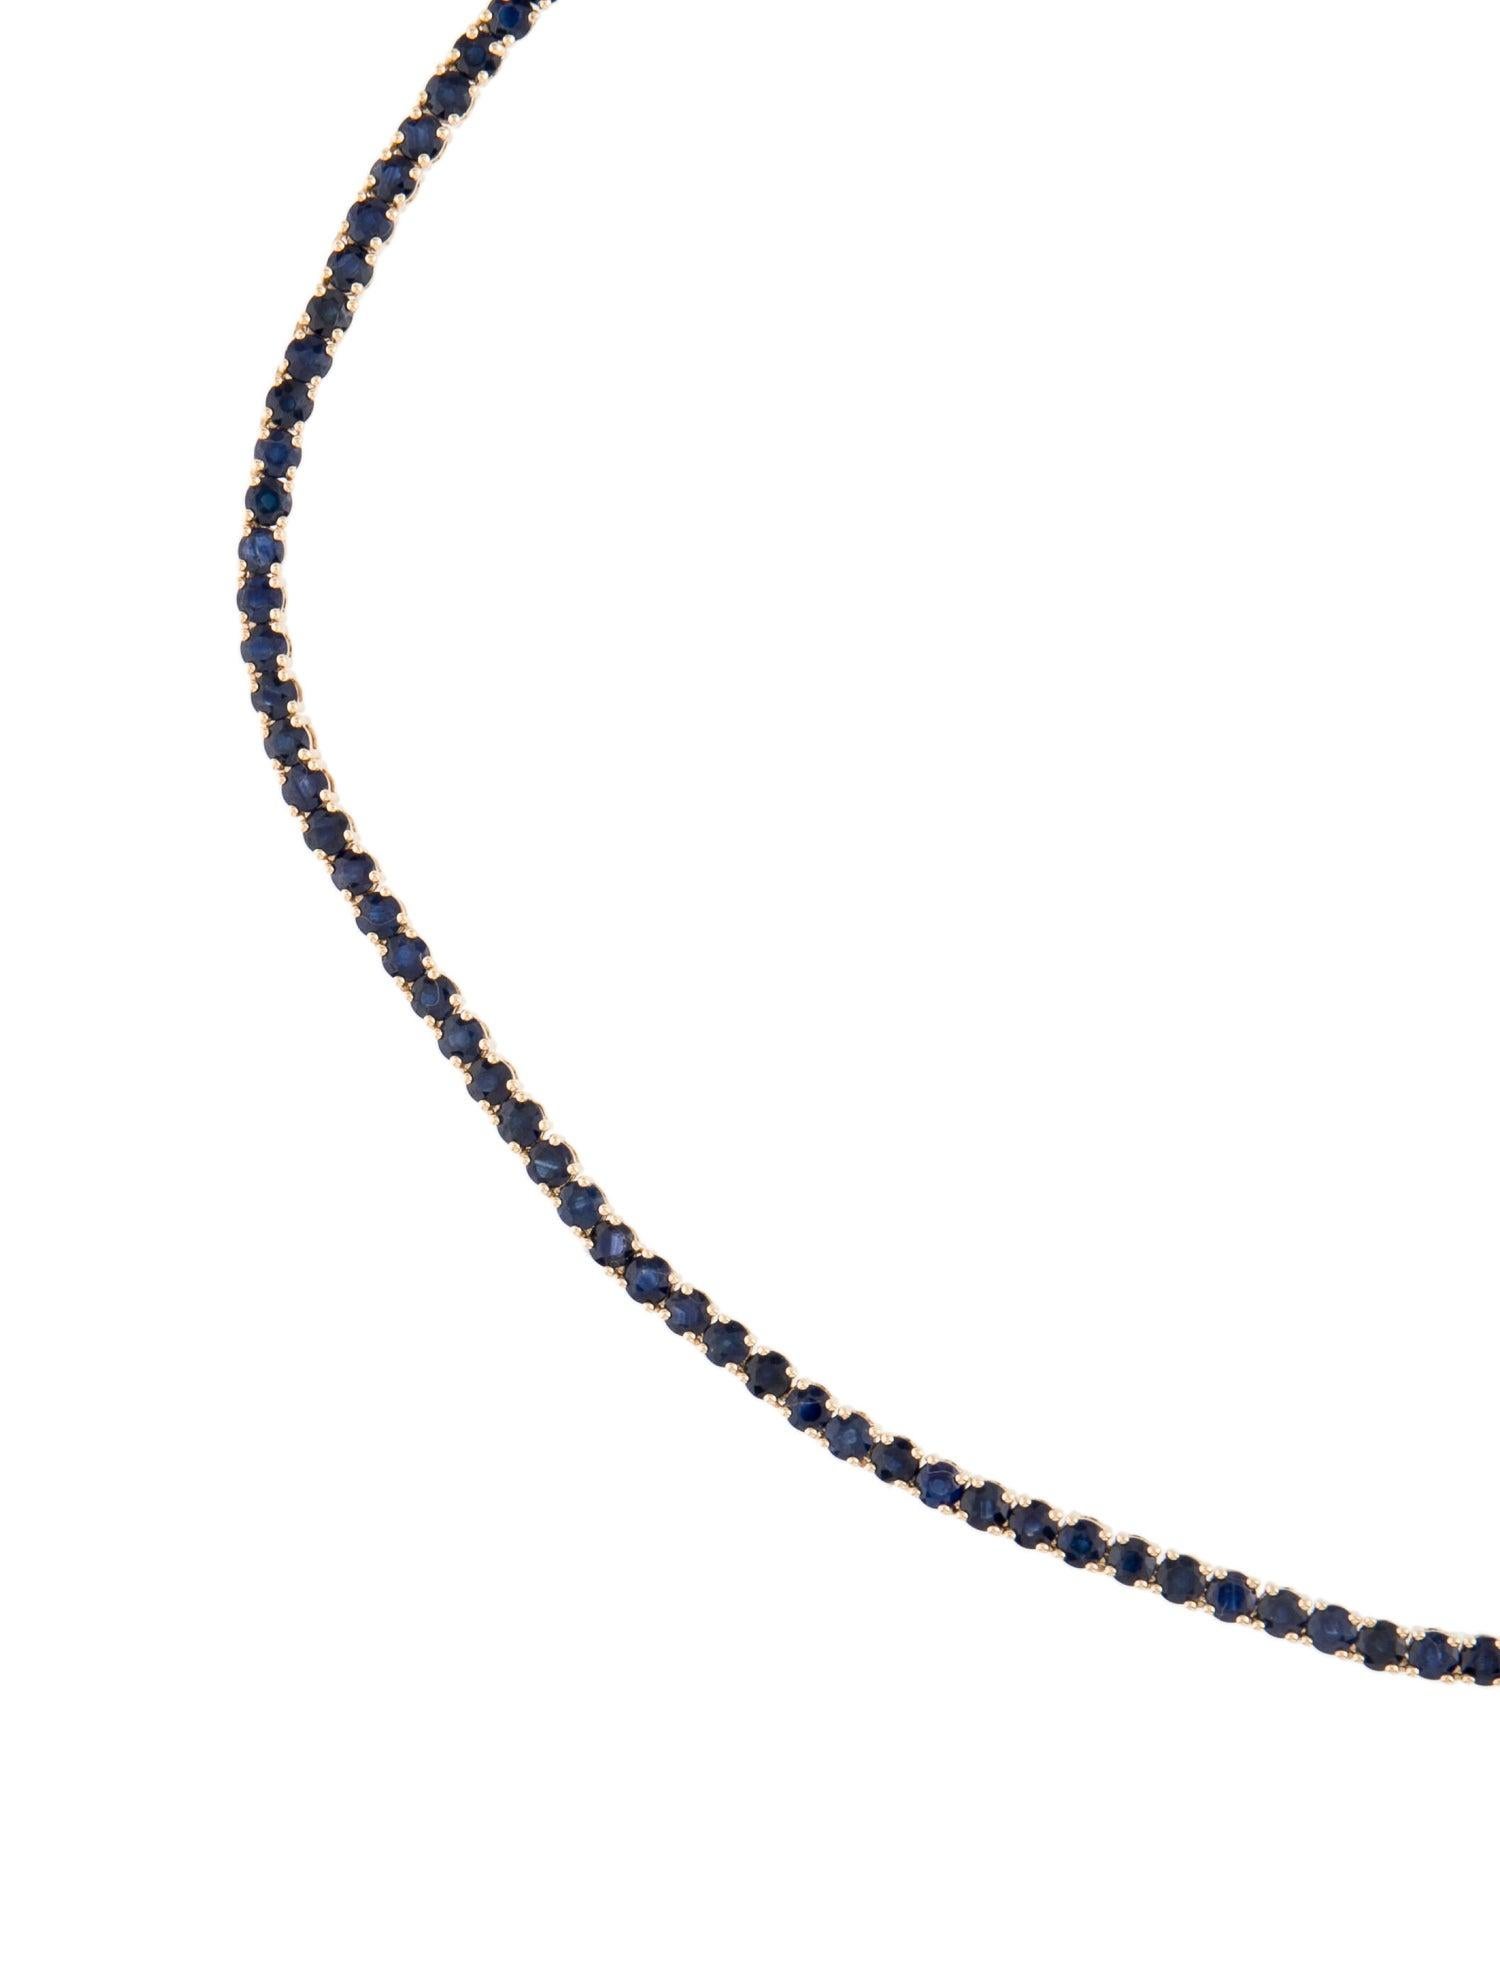 Brilliant Cut 14K 23.31ctw Sapphire Chain Necklace - Elegant Gemstone Statement Jewelry